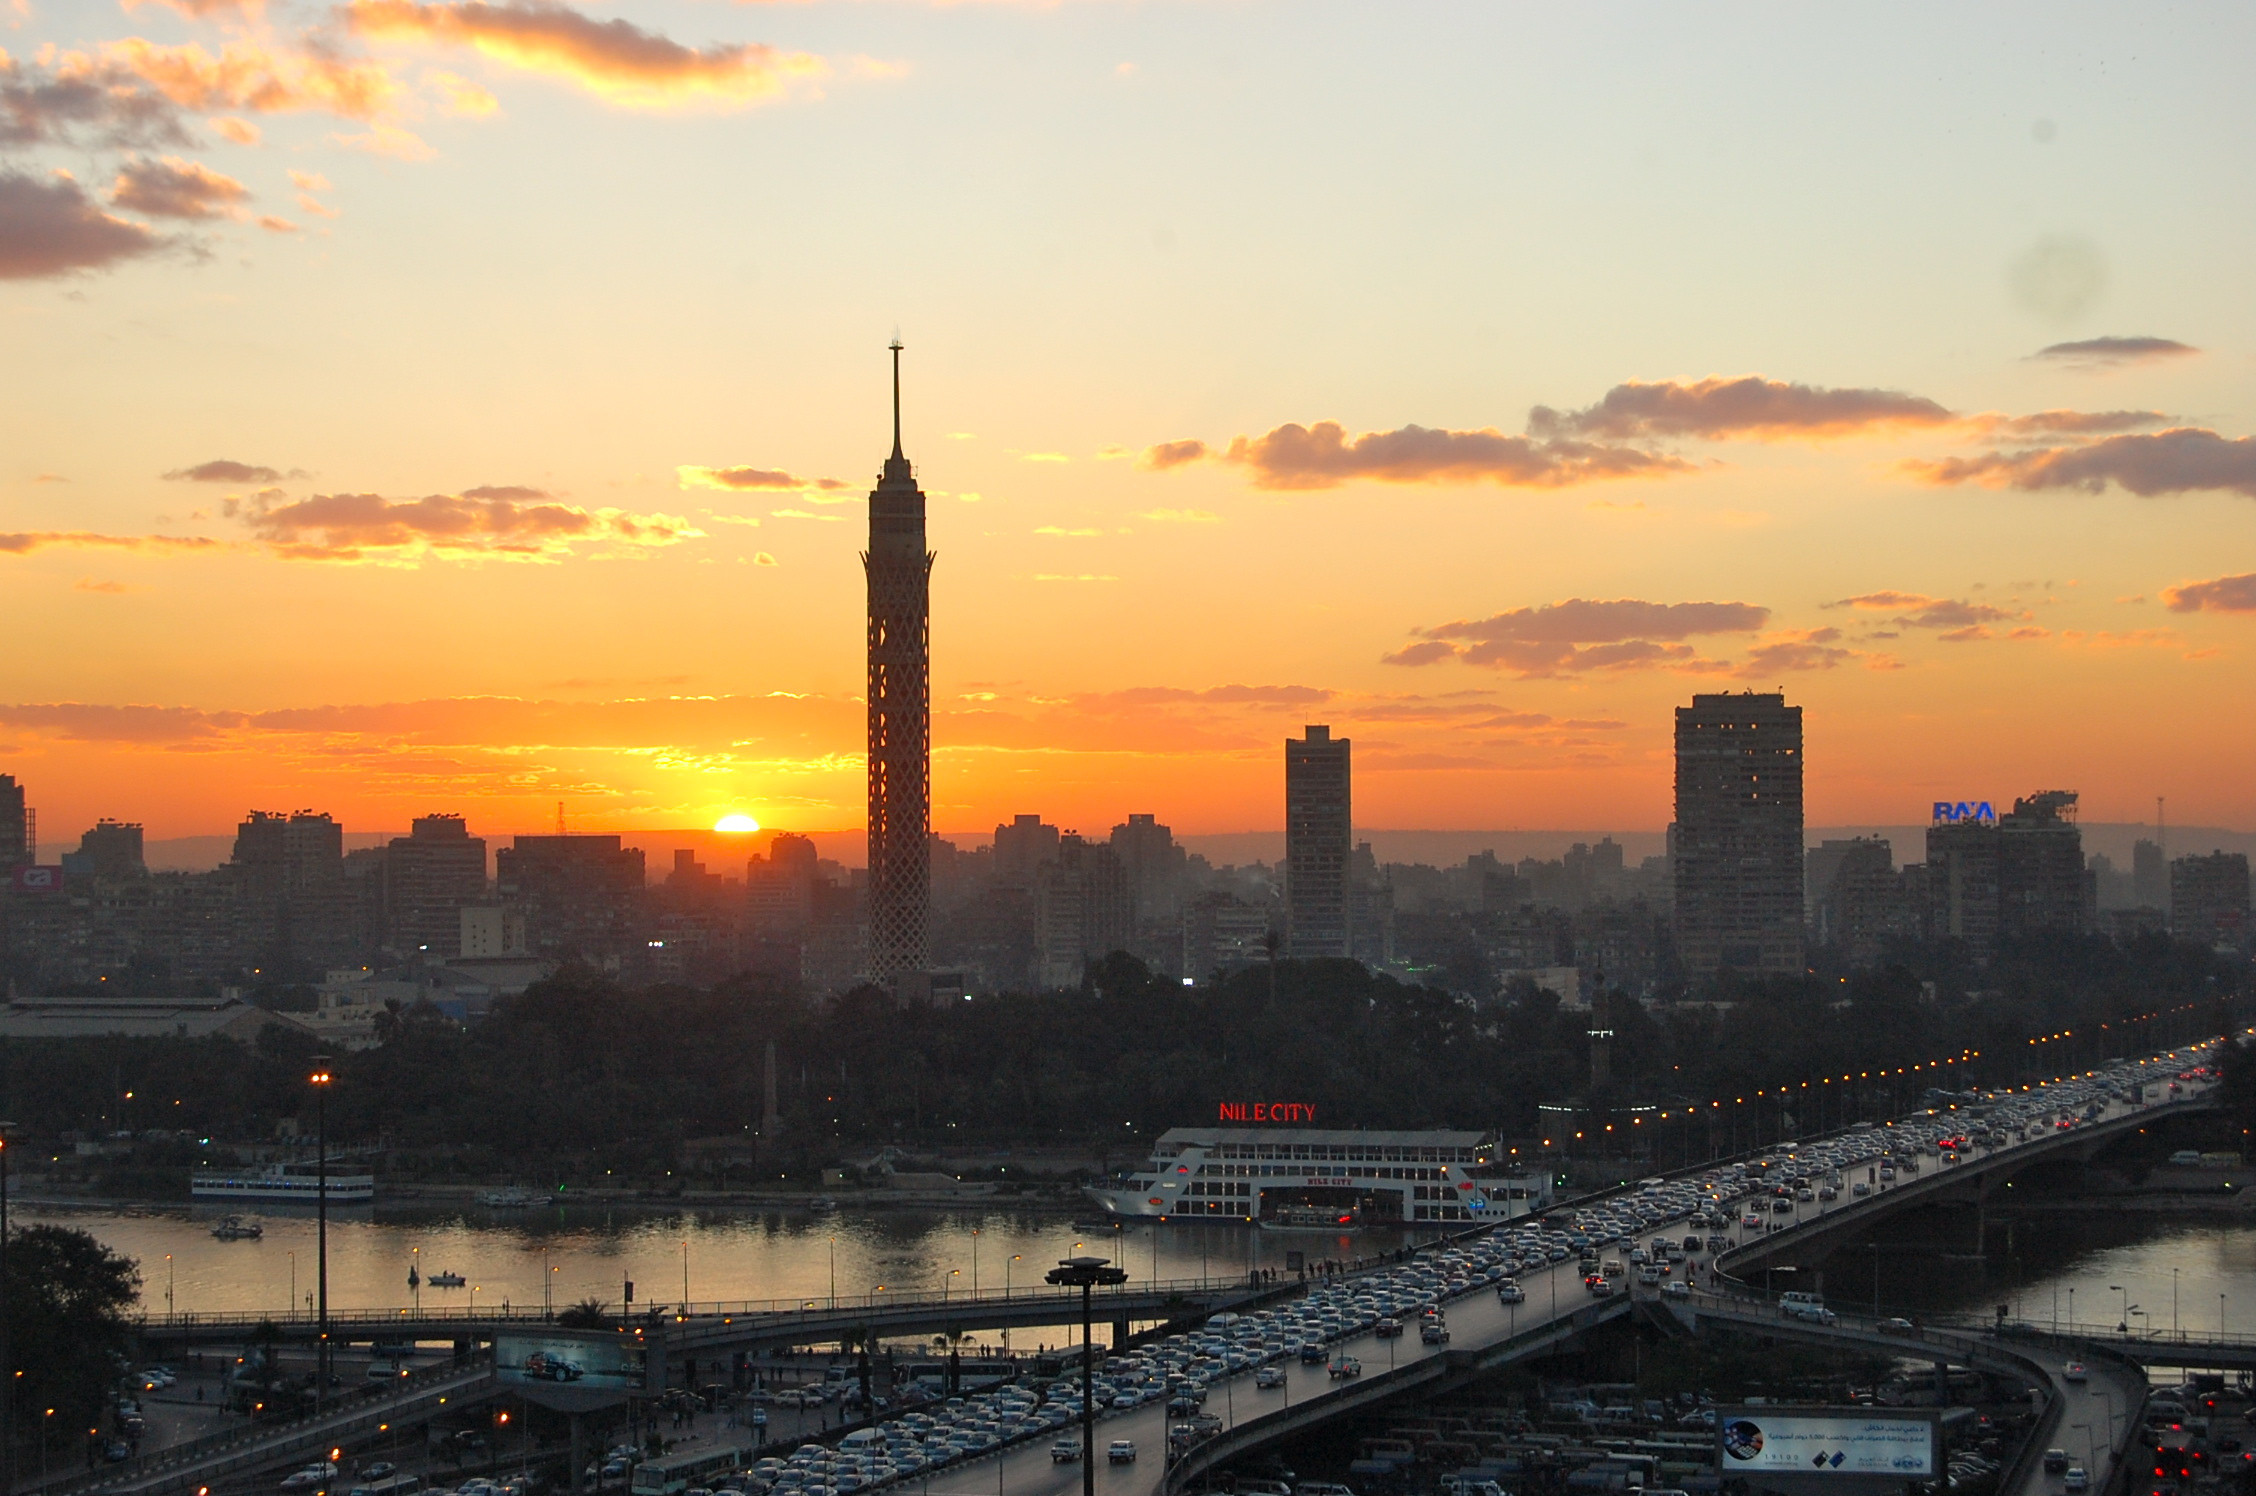 Daylight savings returns to Egypt as energy crisis looms | Egyptian Streets